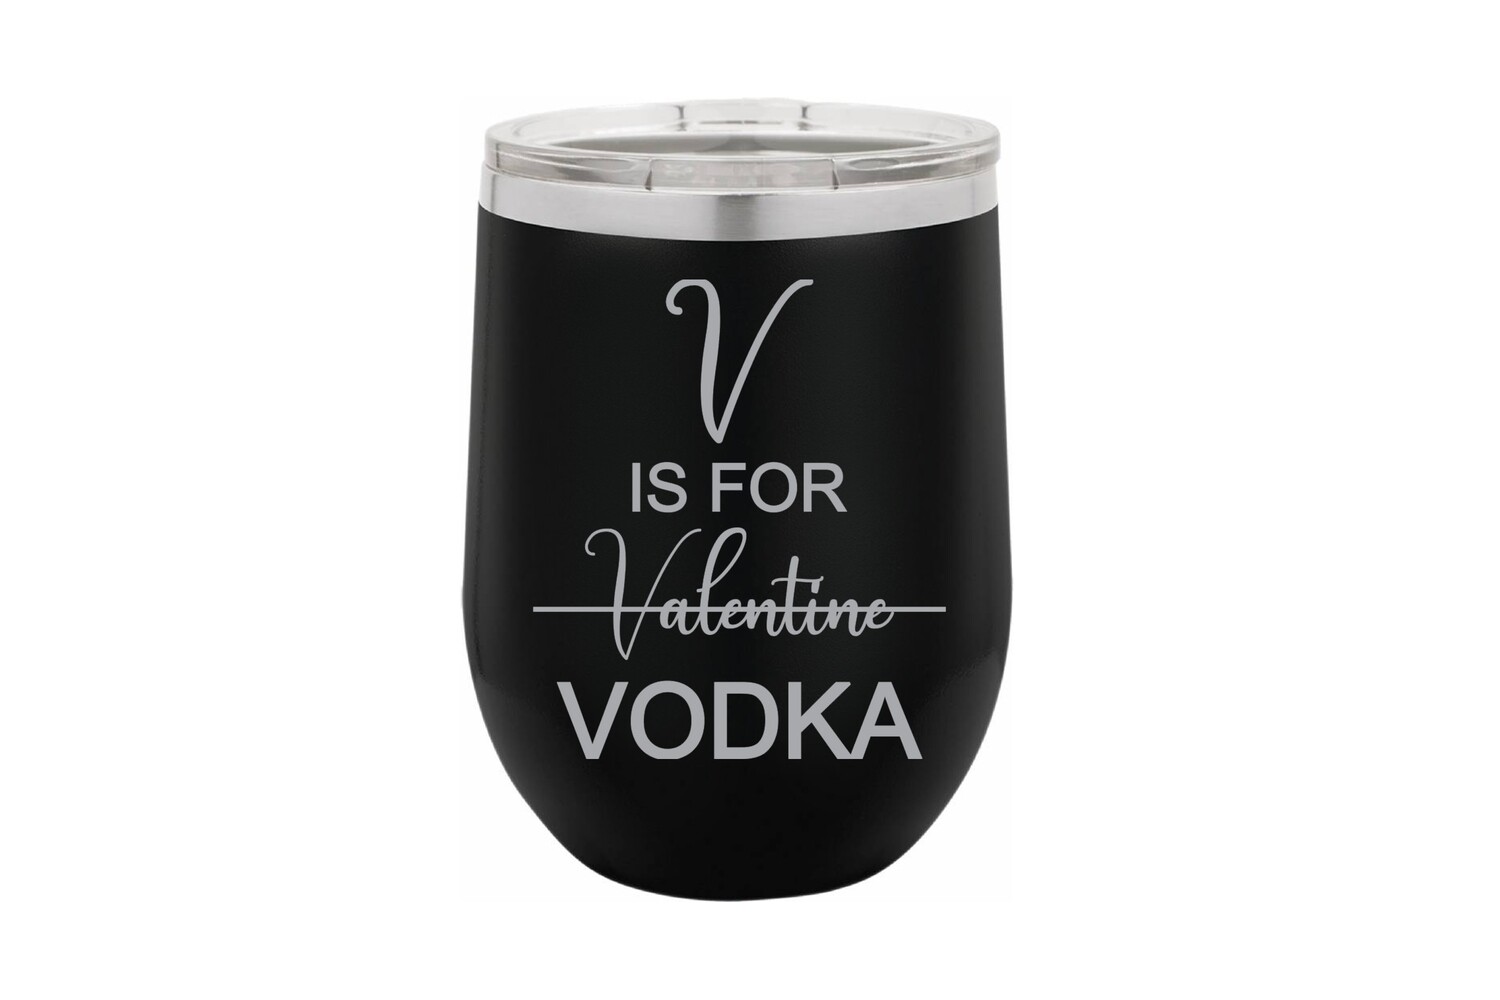 V is for Valentine Vodka Insulated Tumbler 12 oz